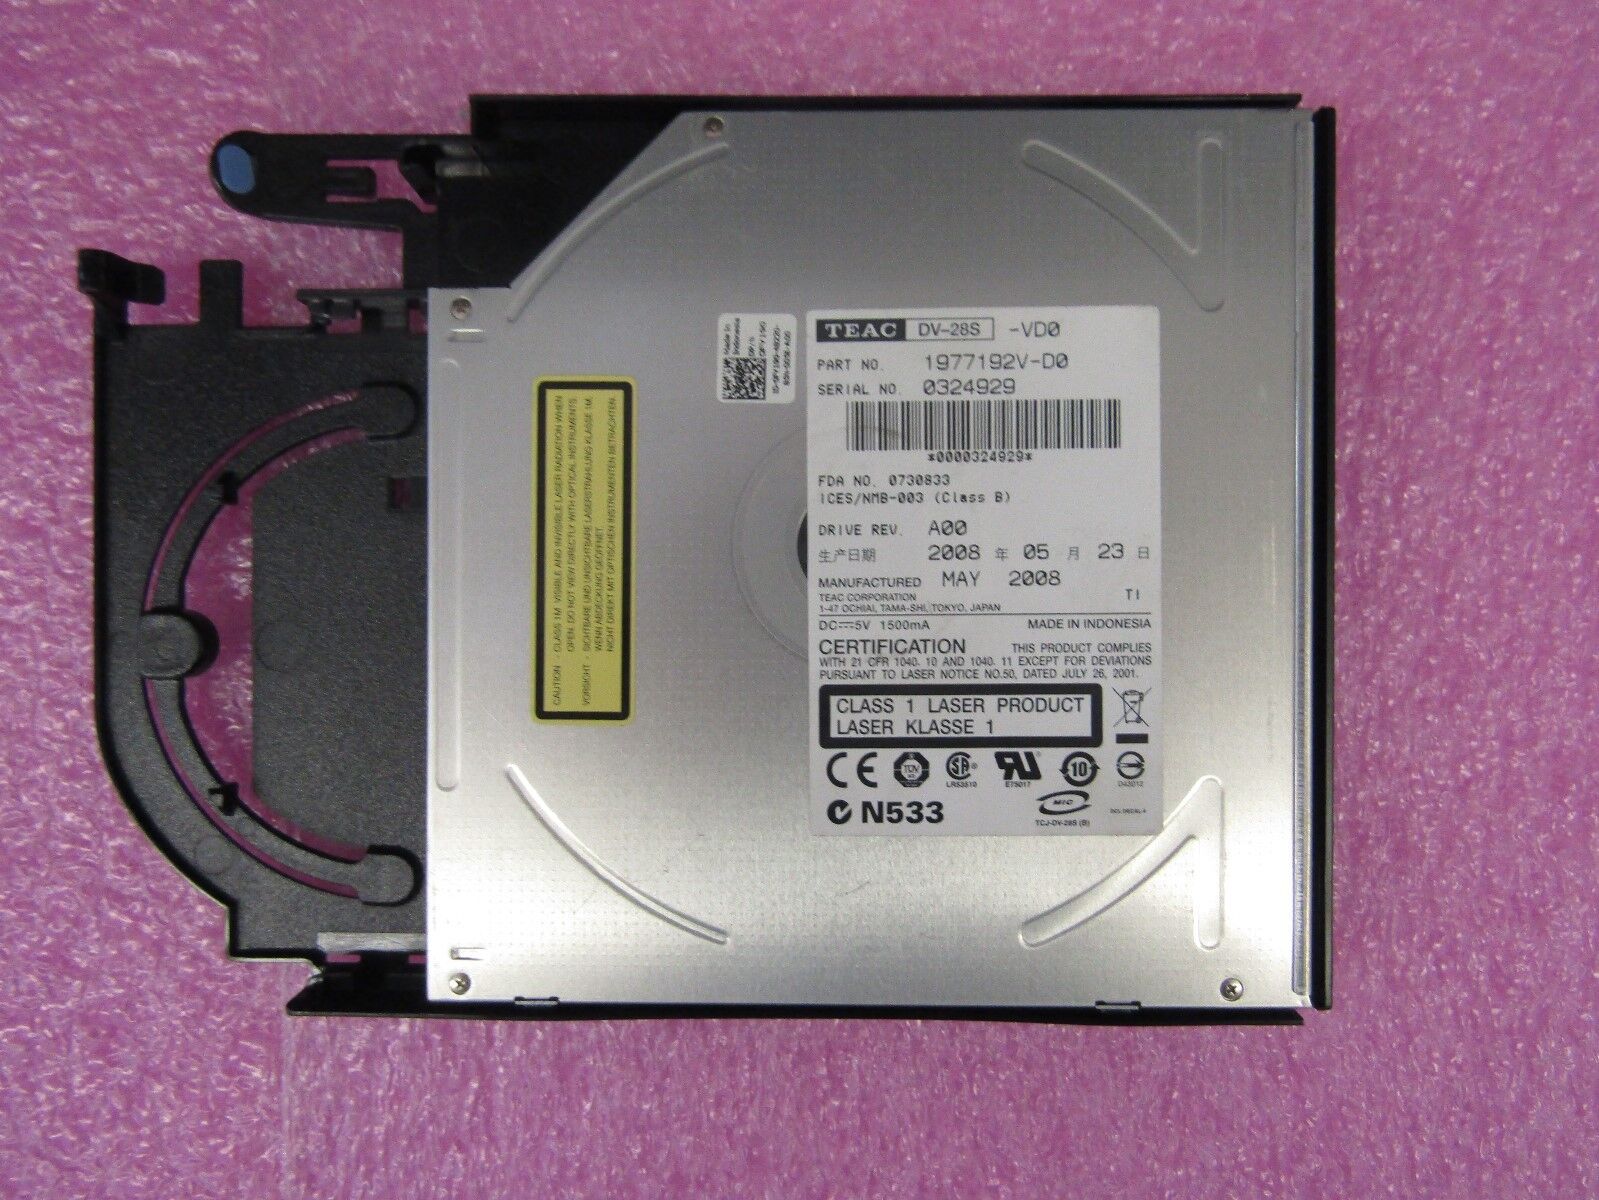 FY190 Dell PowerEdge Server SATA DVD-ROM Optical Drive W/ Mounting Bracket 